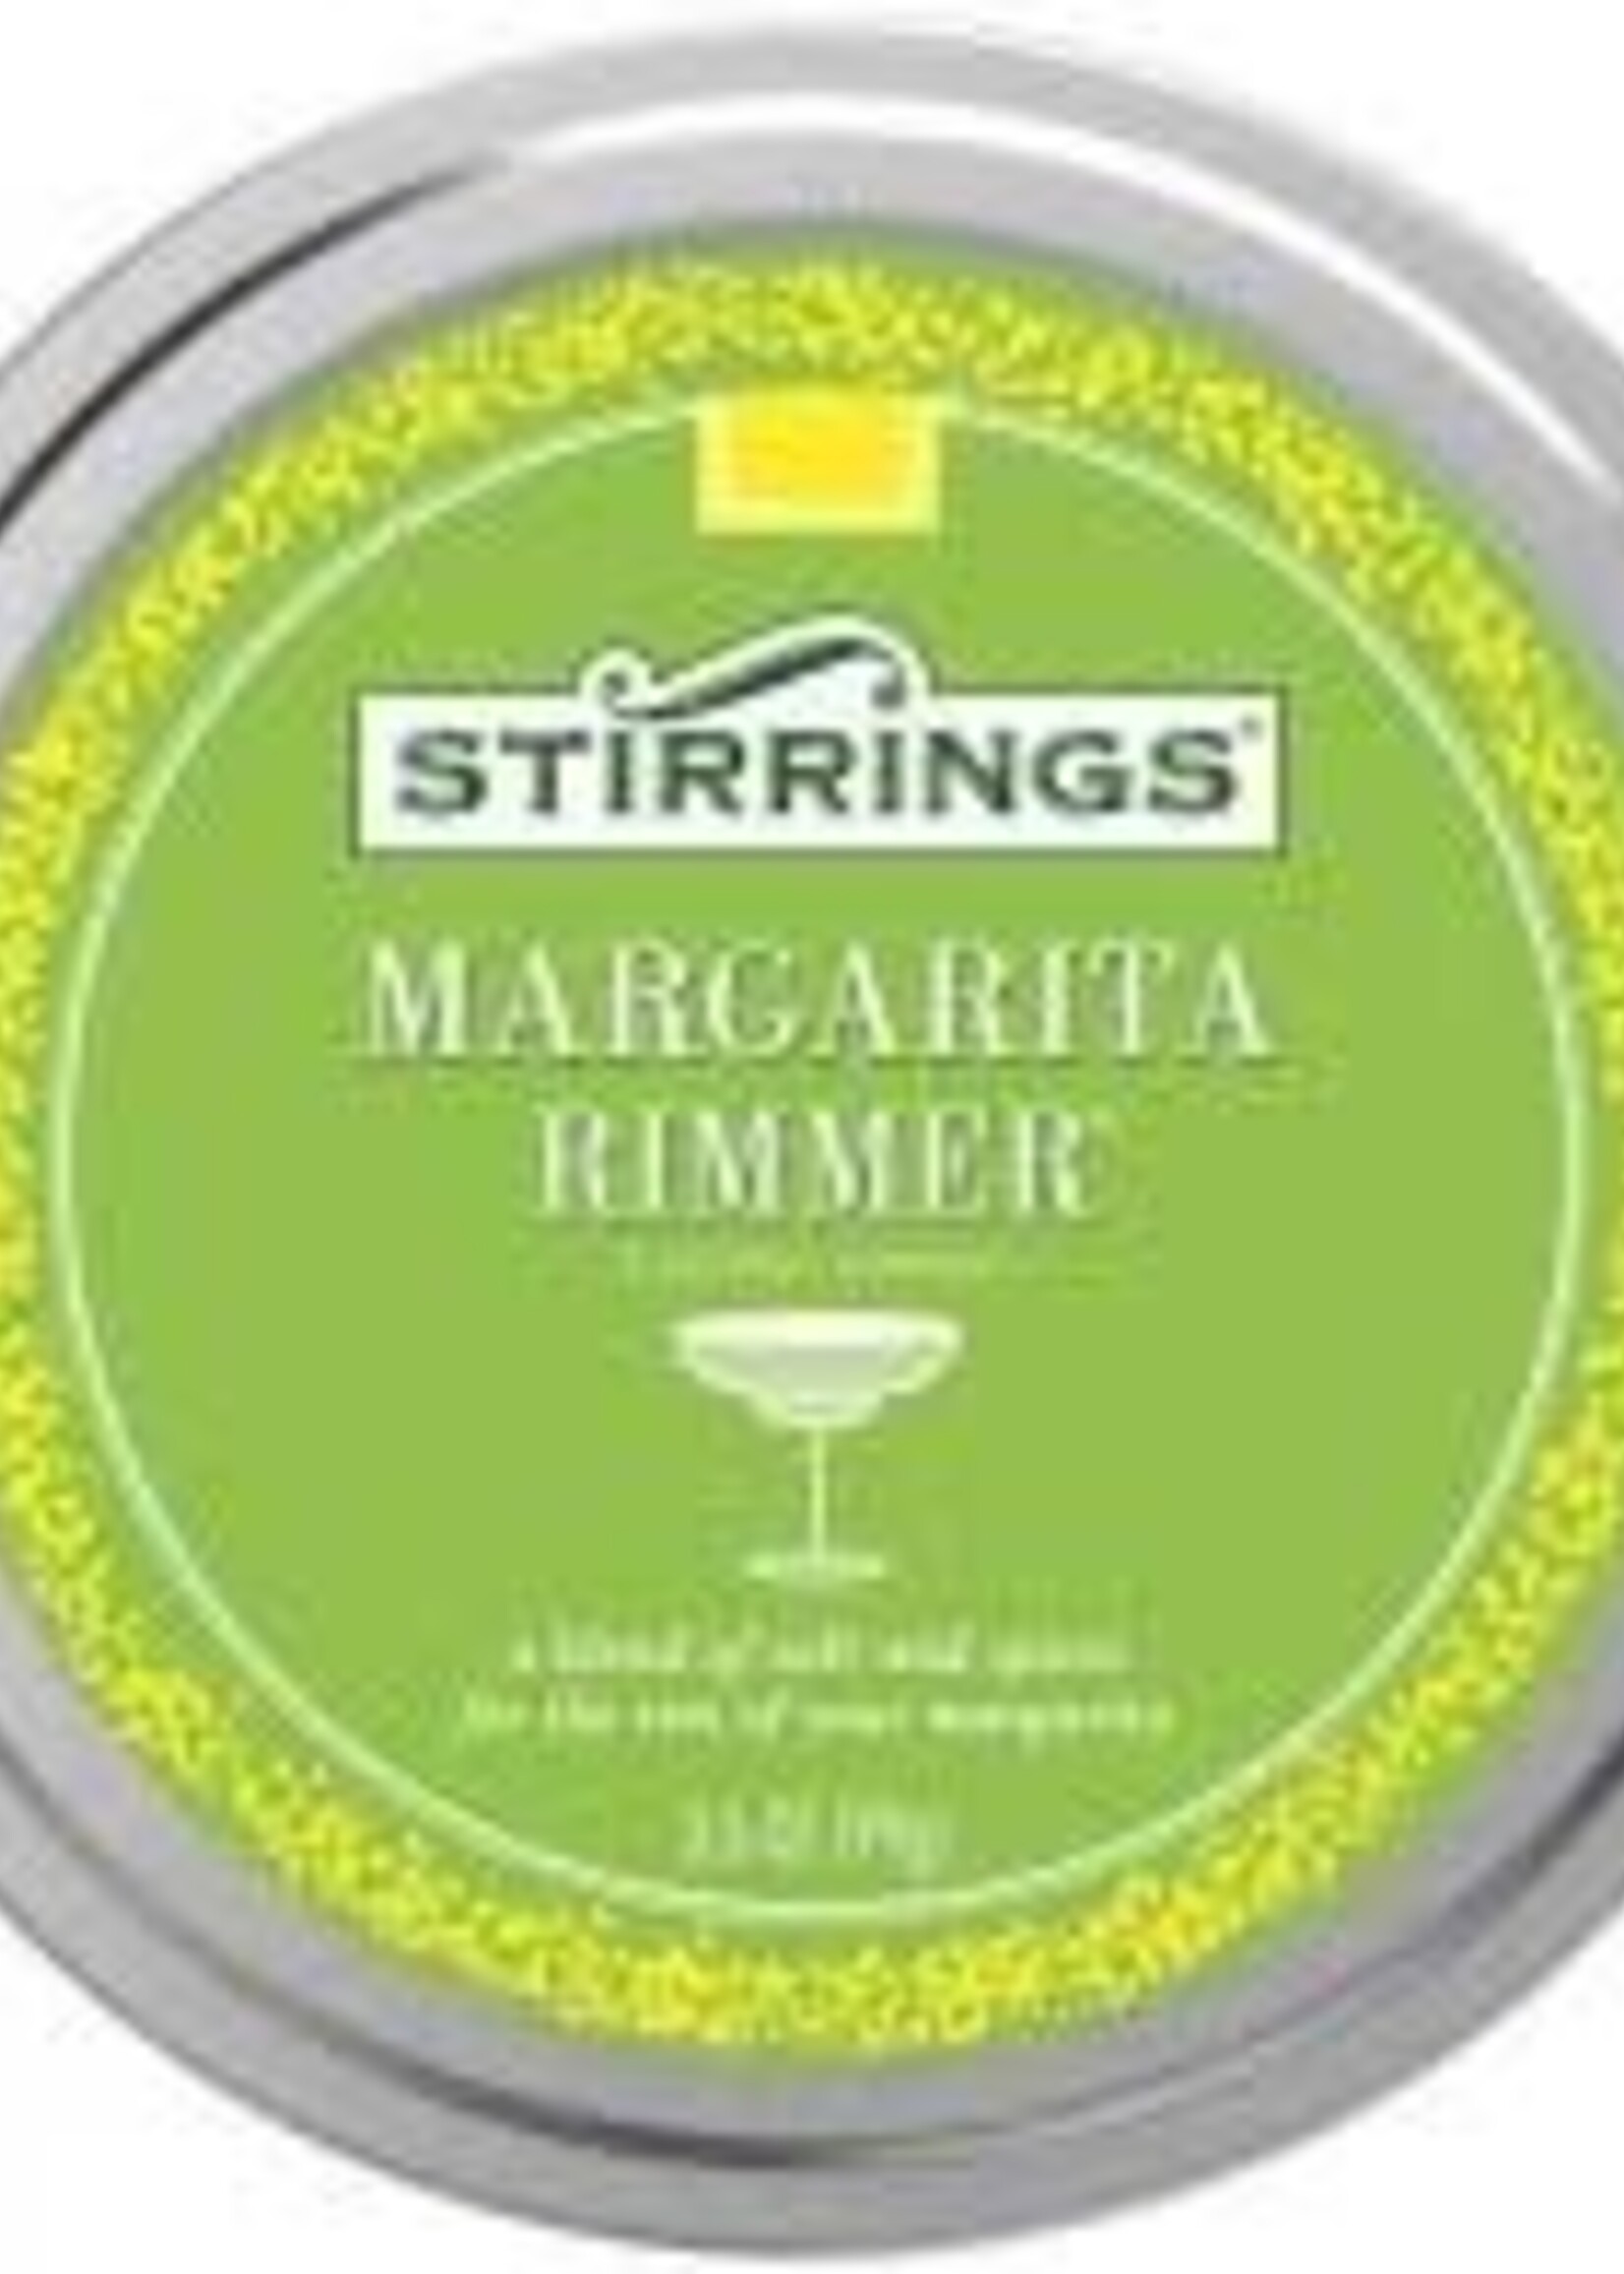 Stirrings Stirrings Cocktail Rimmer Margarita